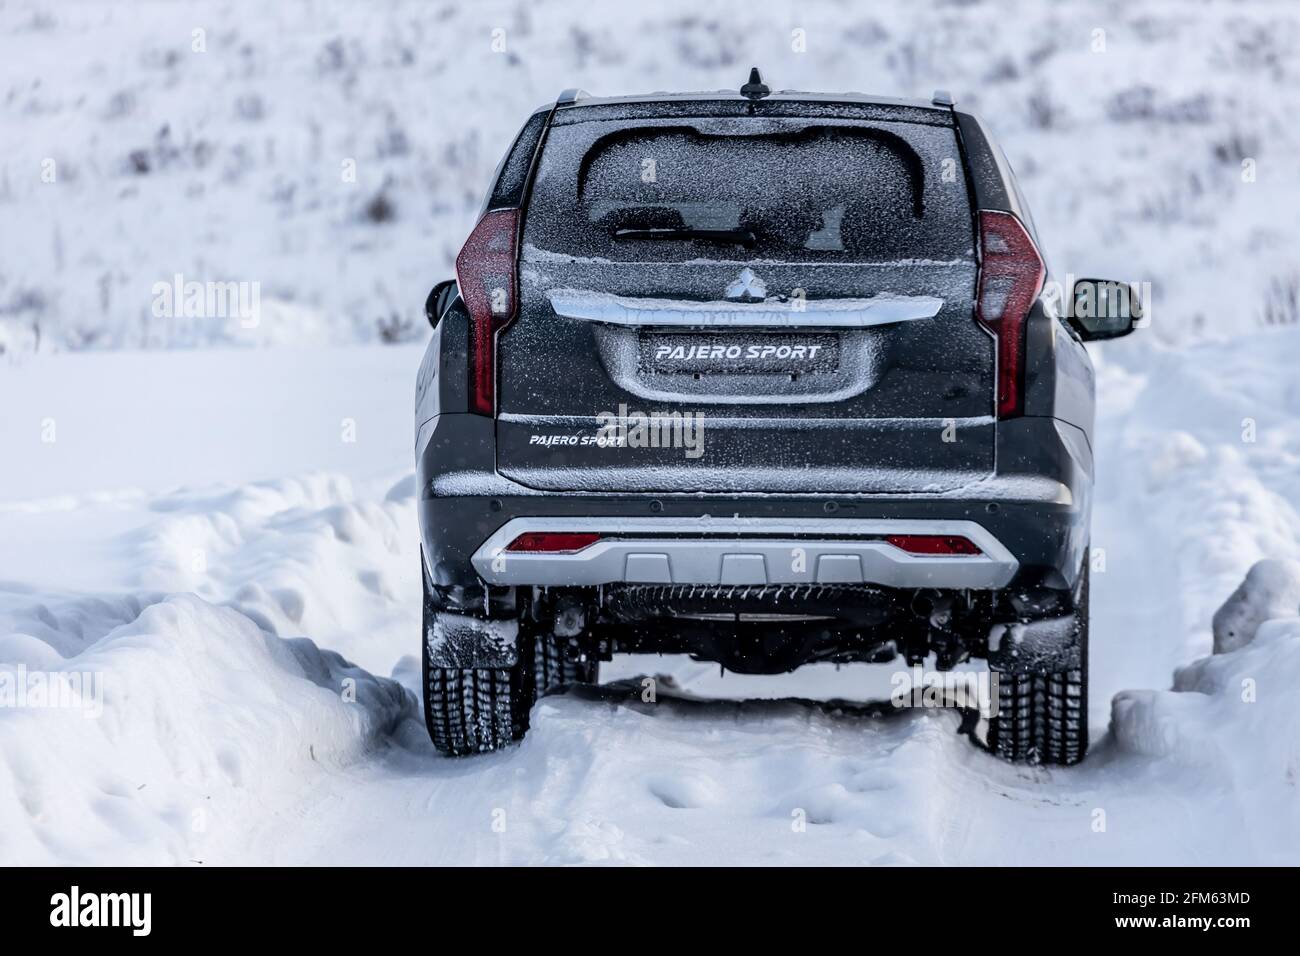 Moscow, Russia - February 17, 2021: All new Mitsubishi Pajero